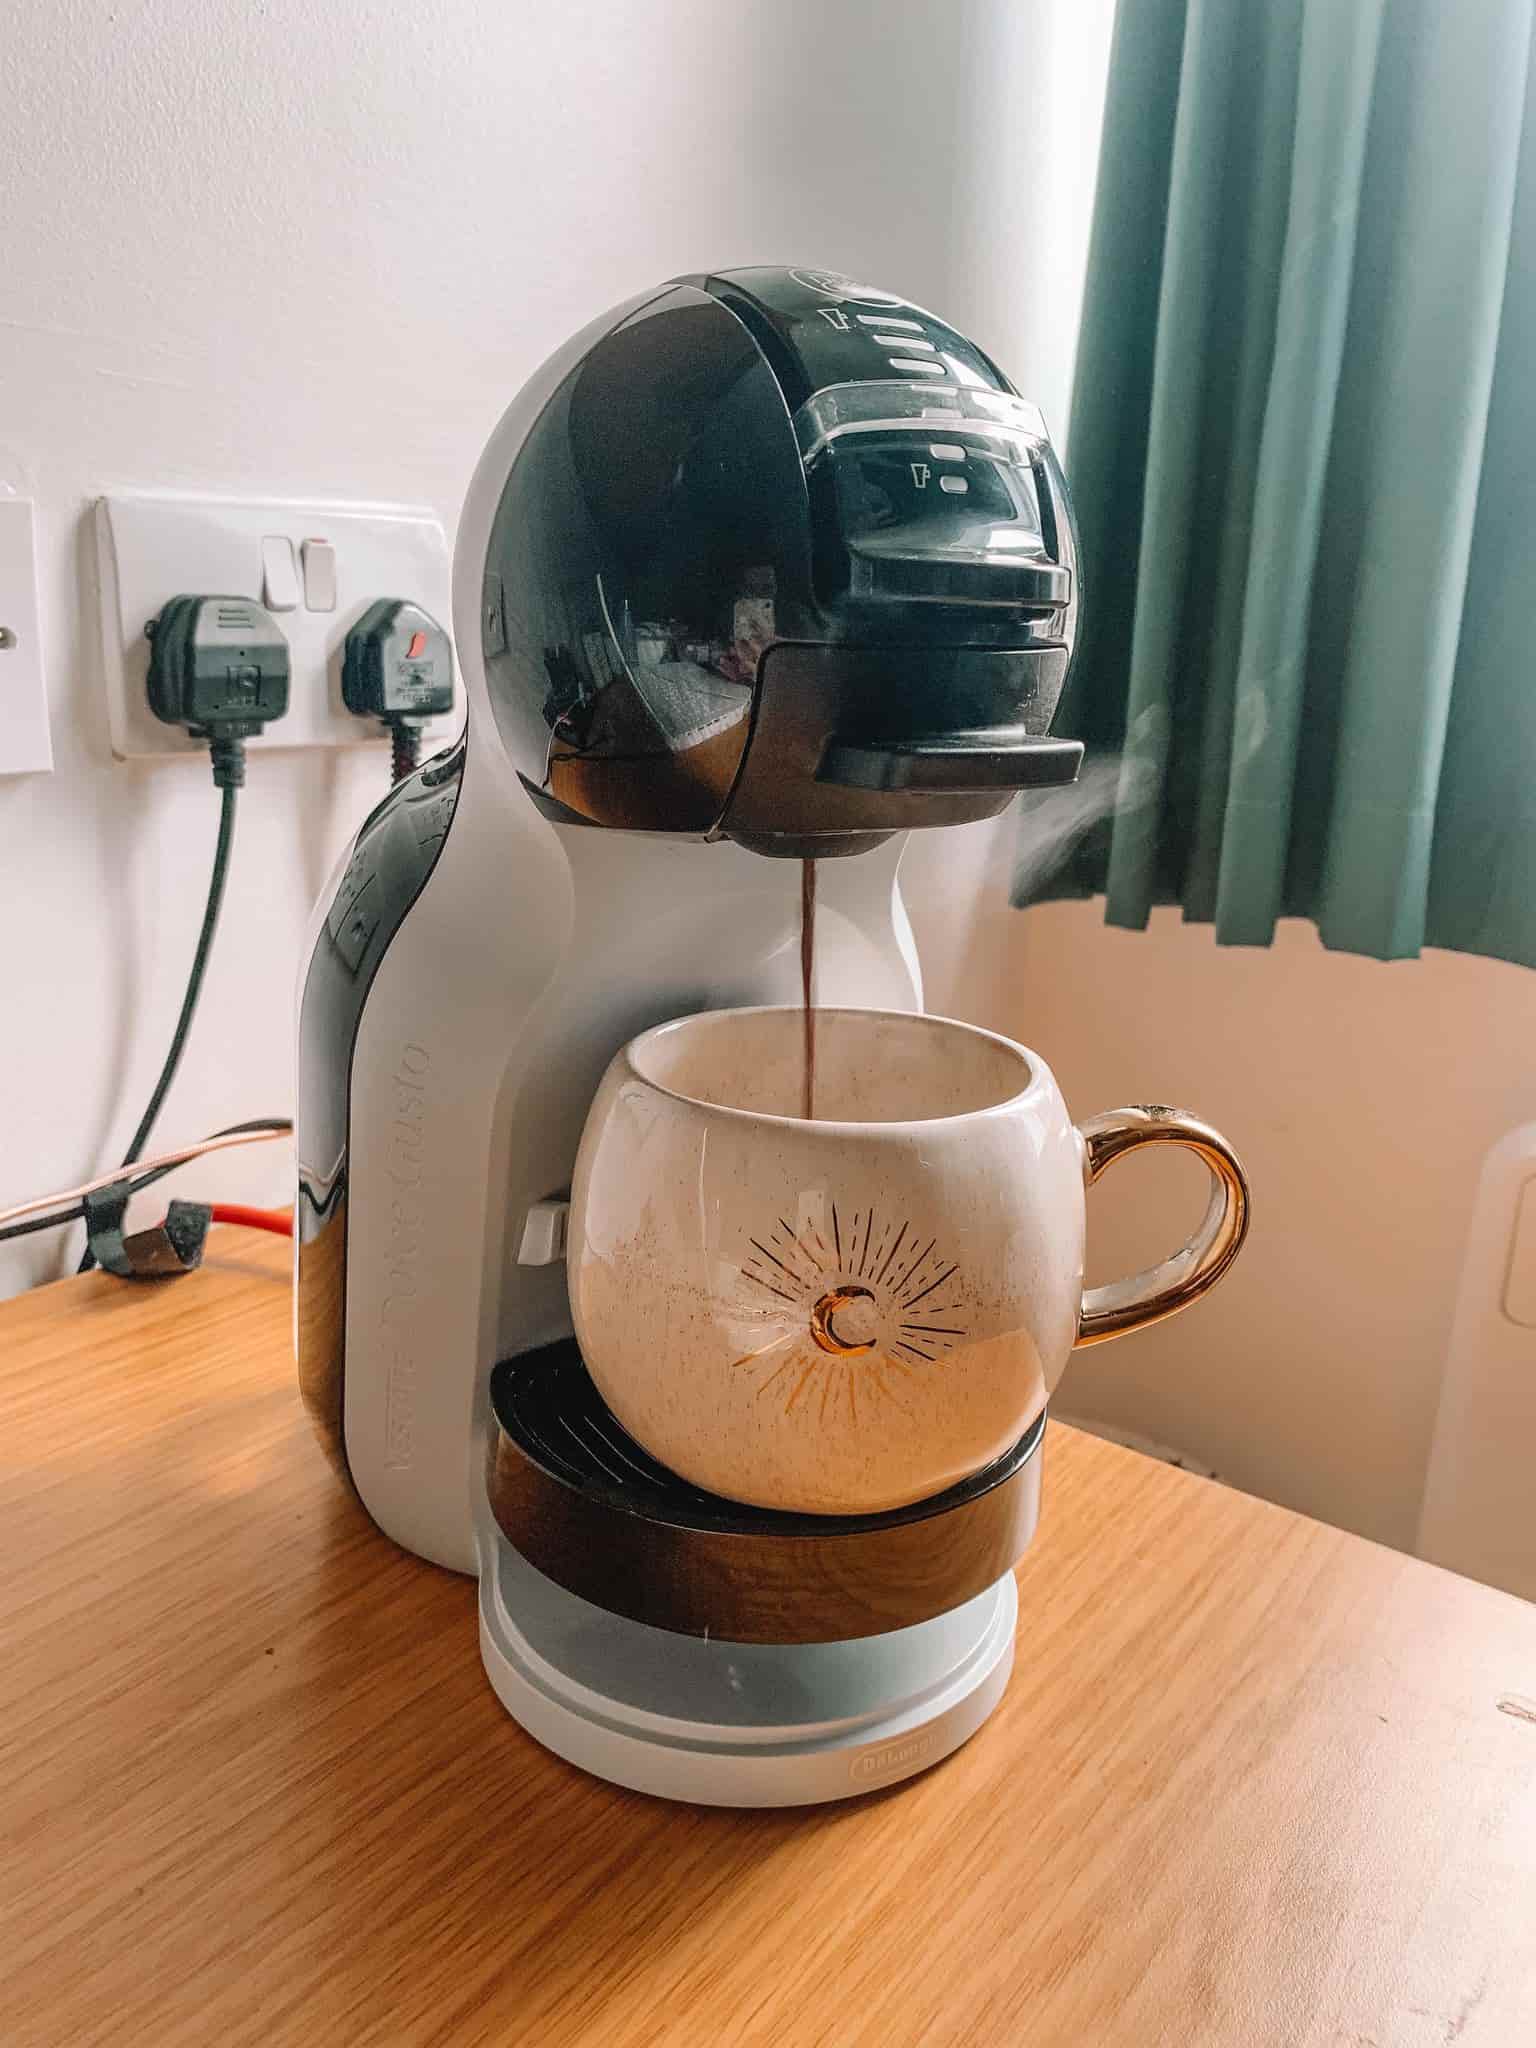 Nescafe Dolce Gusto Coffee Machine